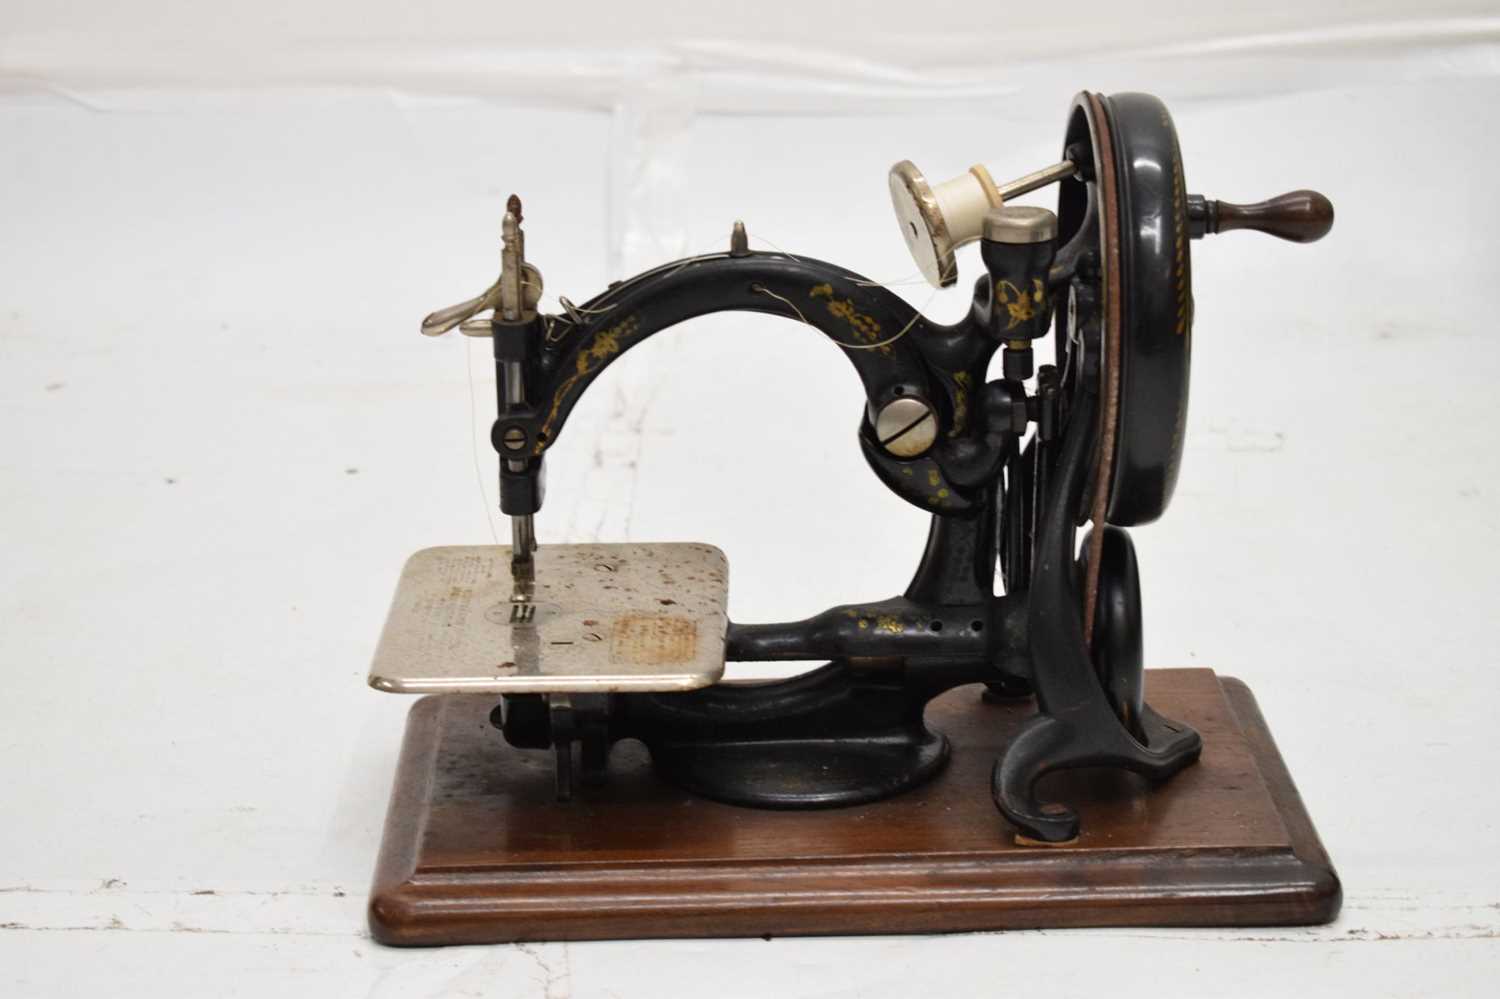 Late 19th century Willcox & Gibbs C-frame hand-cranked sewing machine - Image 4 of 9